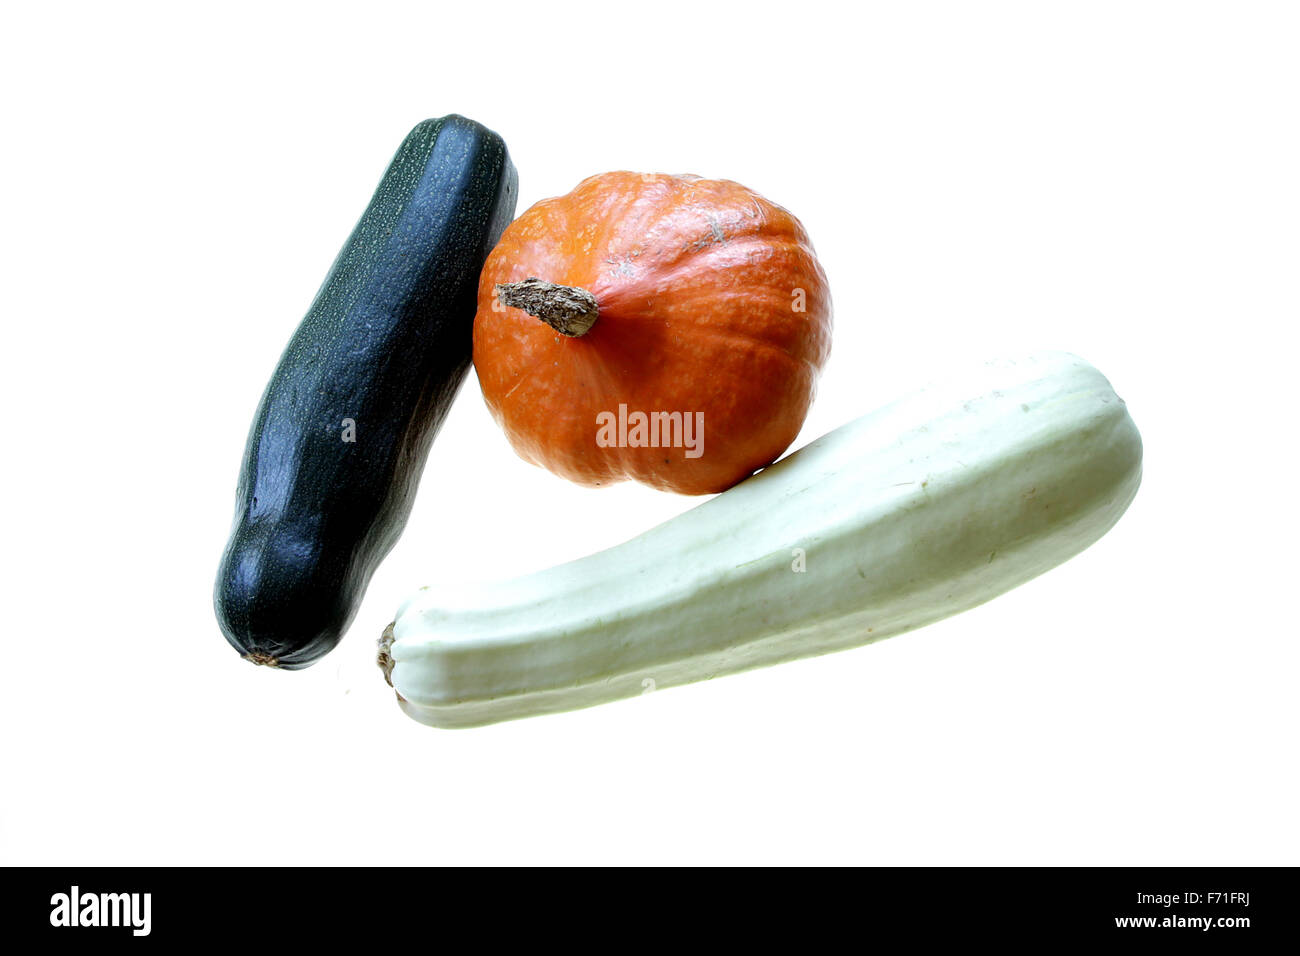 https://c8.alamy.com/comp/F71FRJ/orange-pumpkin-and-green-squash-vegetable-marrow-isolated-on-white-F71FRJ.jpg